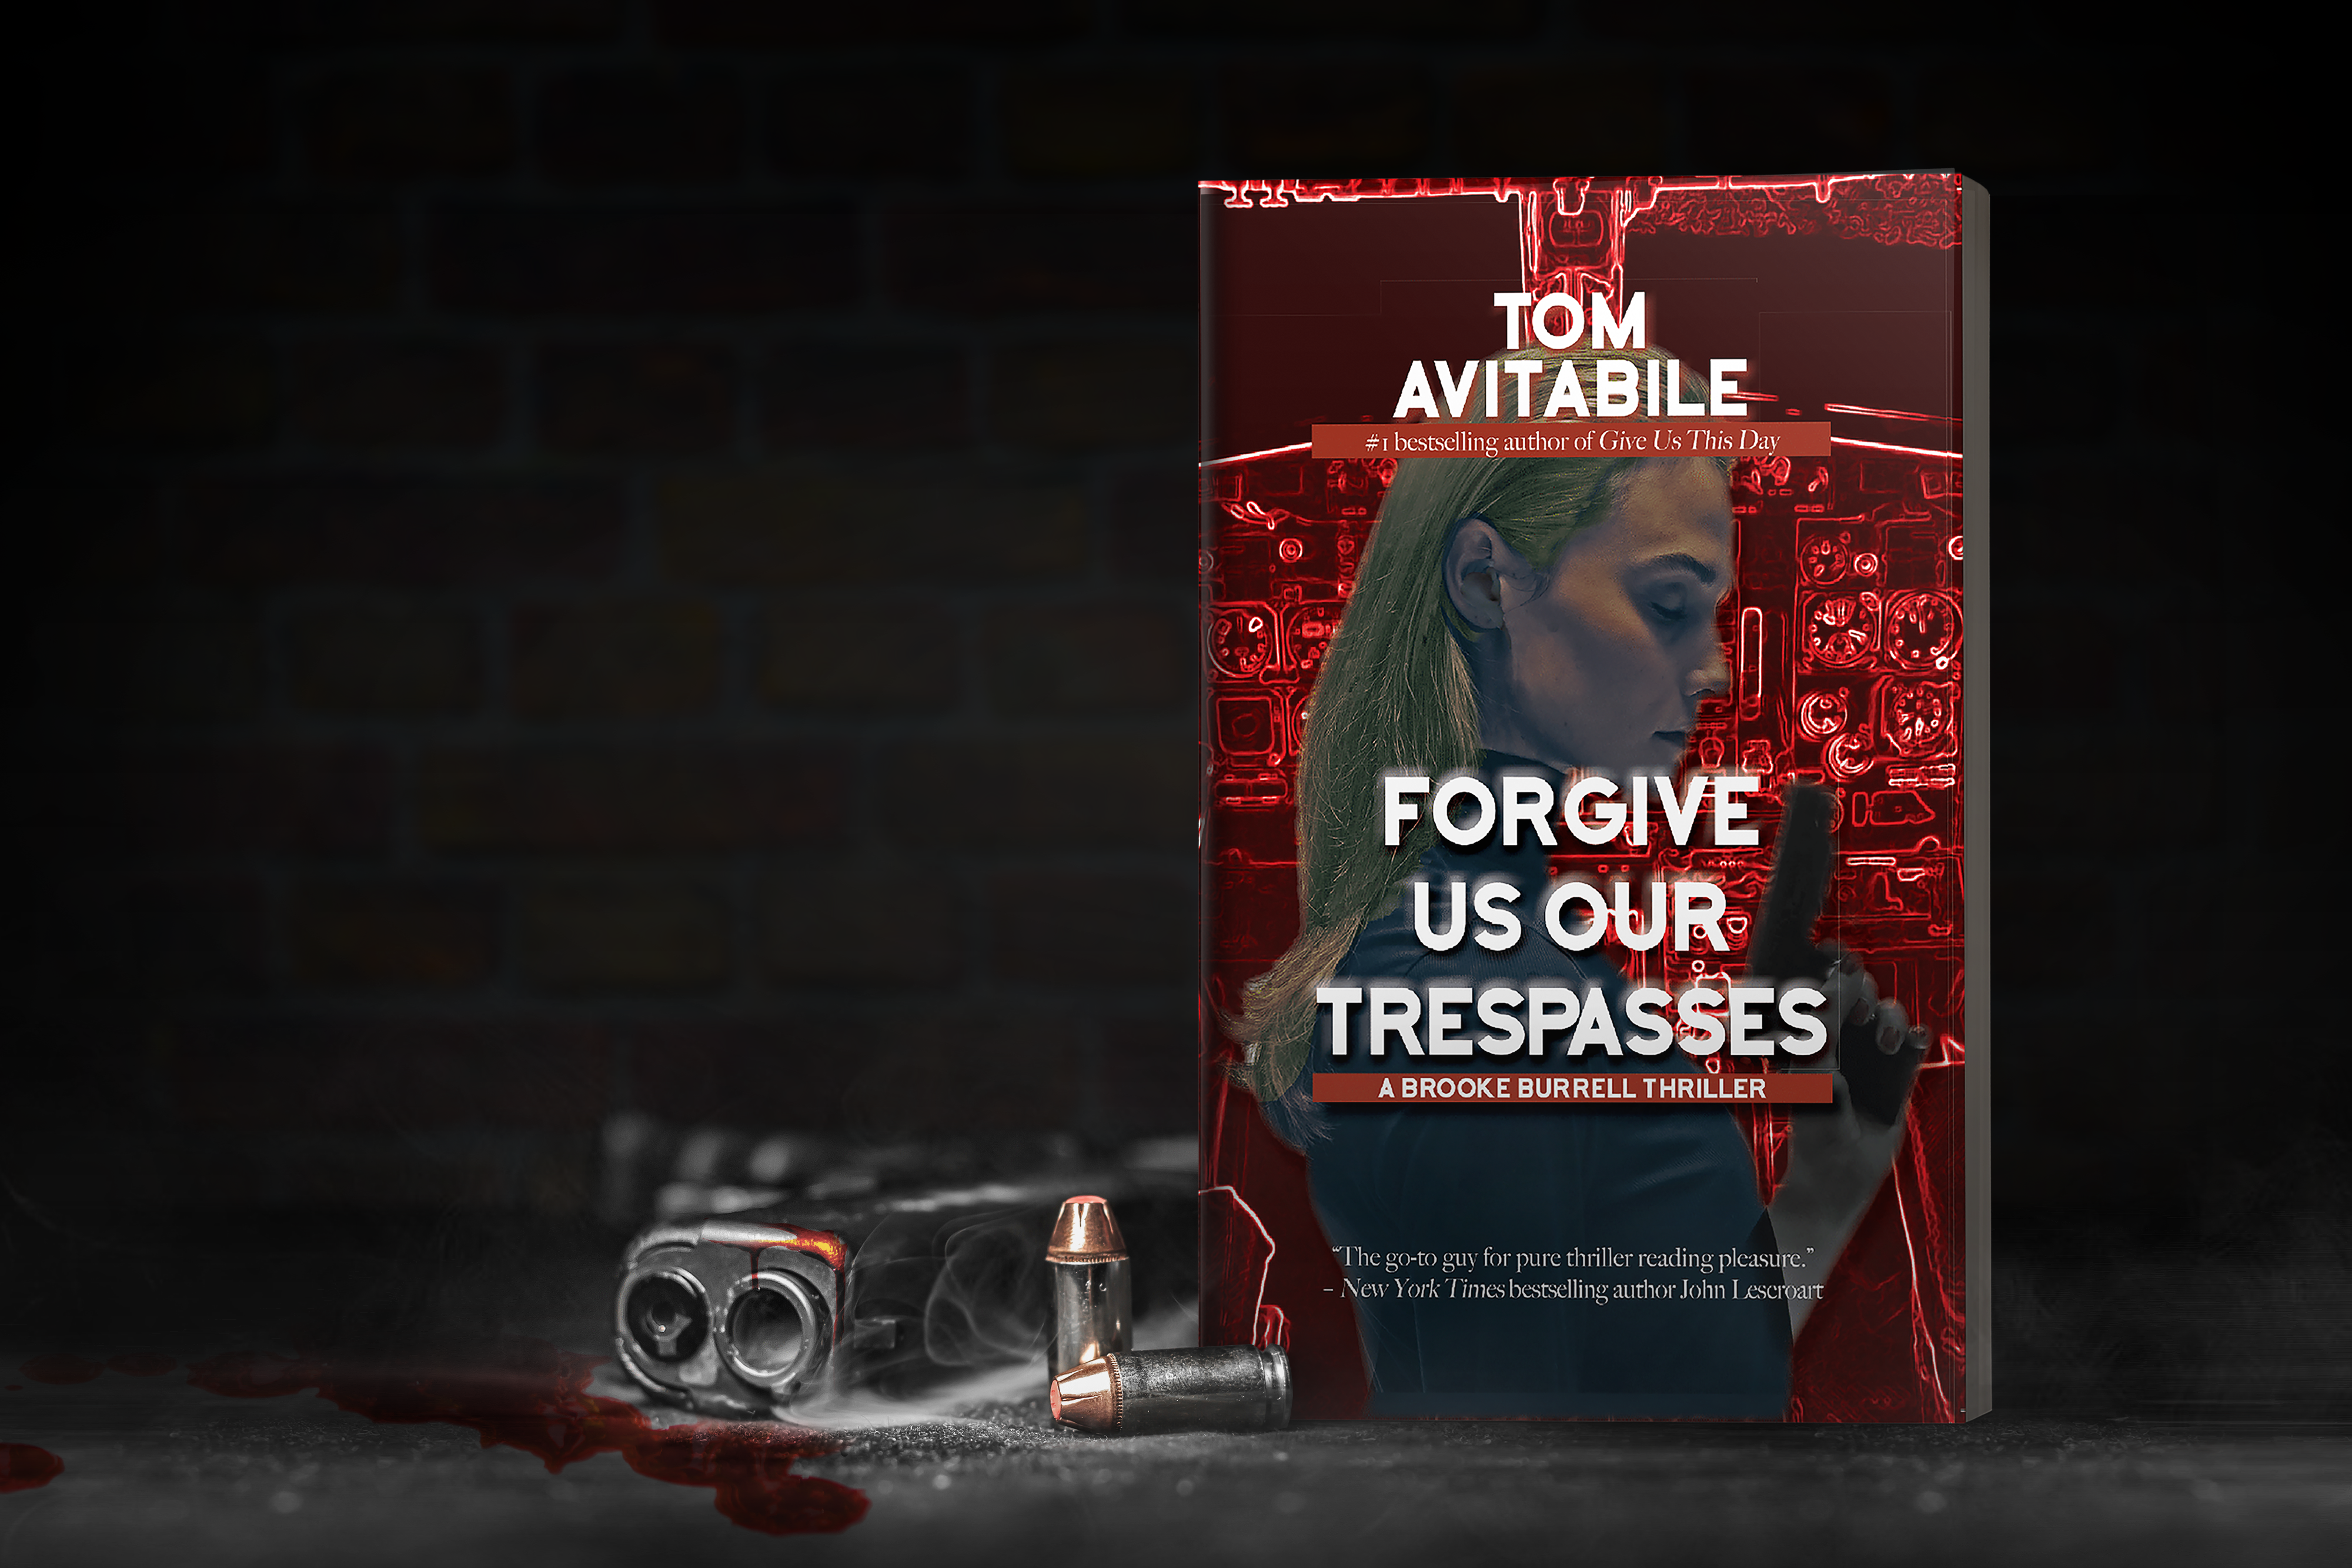 Forgive Us Our Trespasses - the second Brooke Burrell Thriller from Tom Avitabile